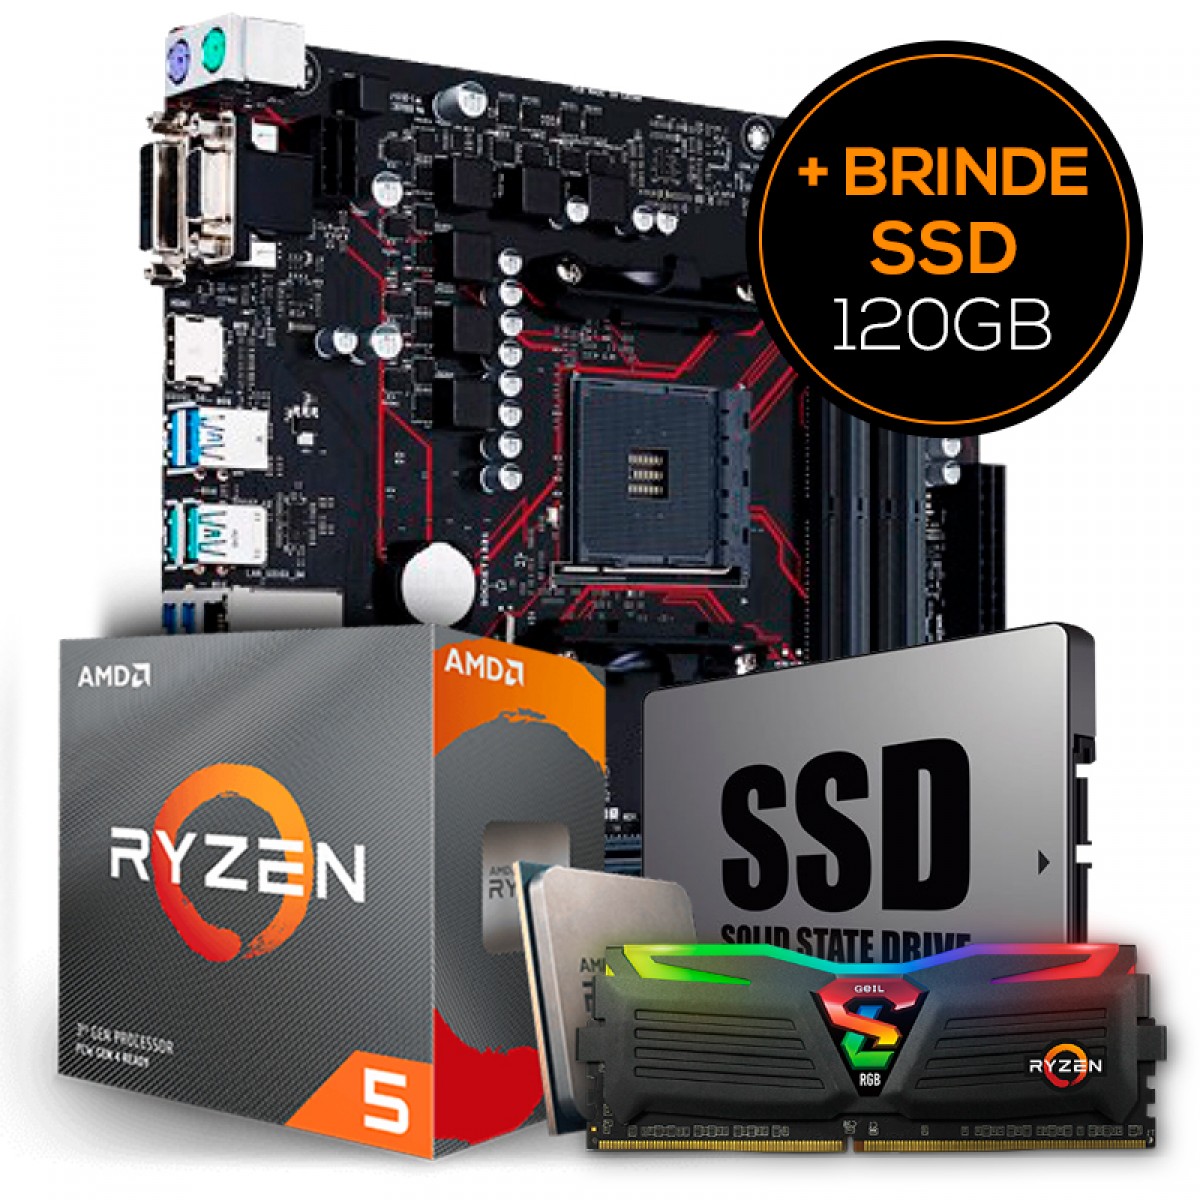 Kit Upgrade Placa Mãe Asus Prime B450M Gaming/BR AMD AM4 + Processador AMD Ryzen 5 3600XT 4.5GHz + Memória DDR4 8GB 3000MHz + Grátis SSD 120GB 